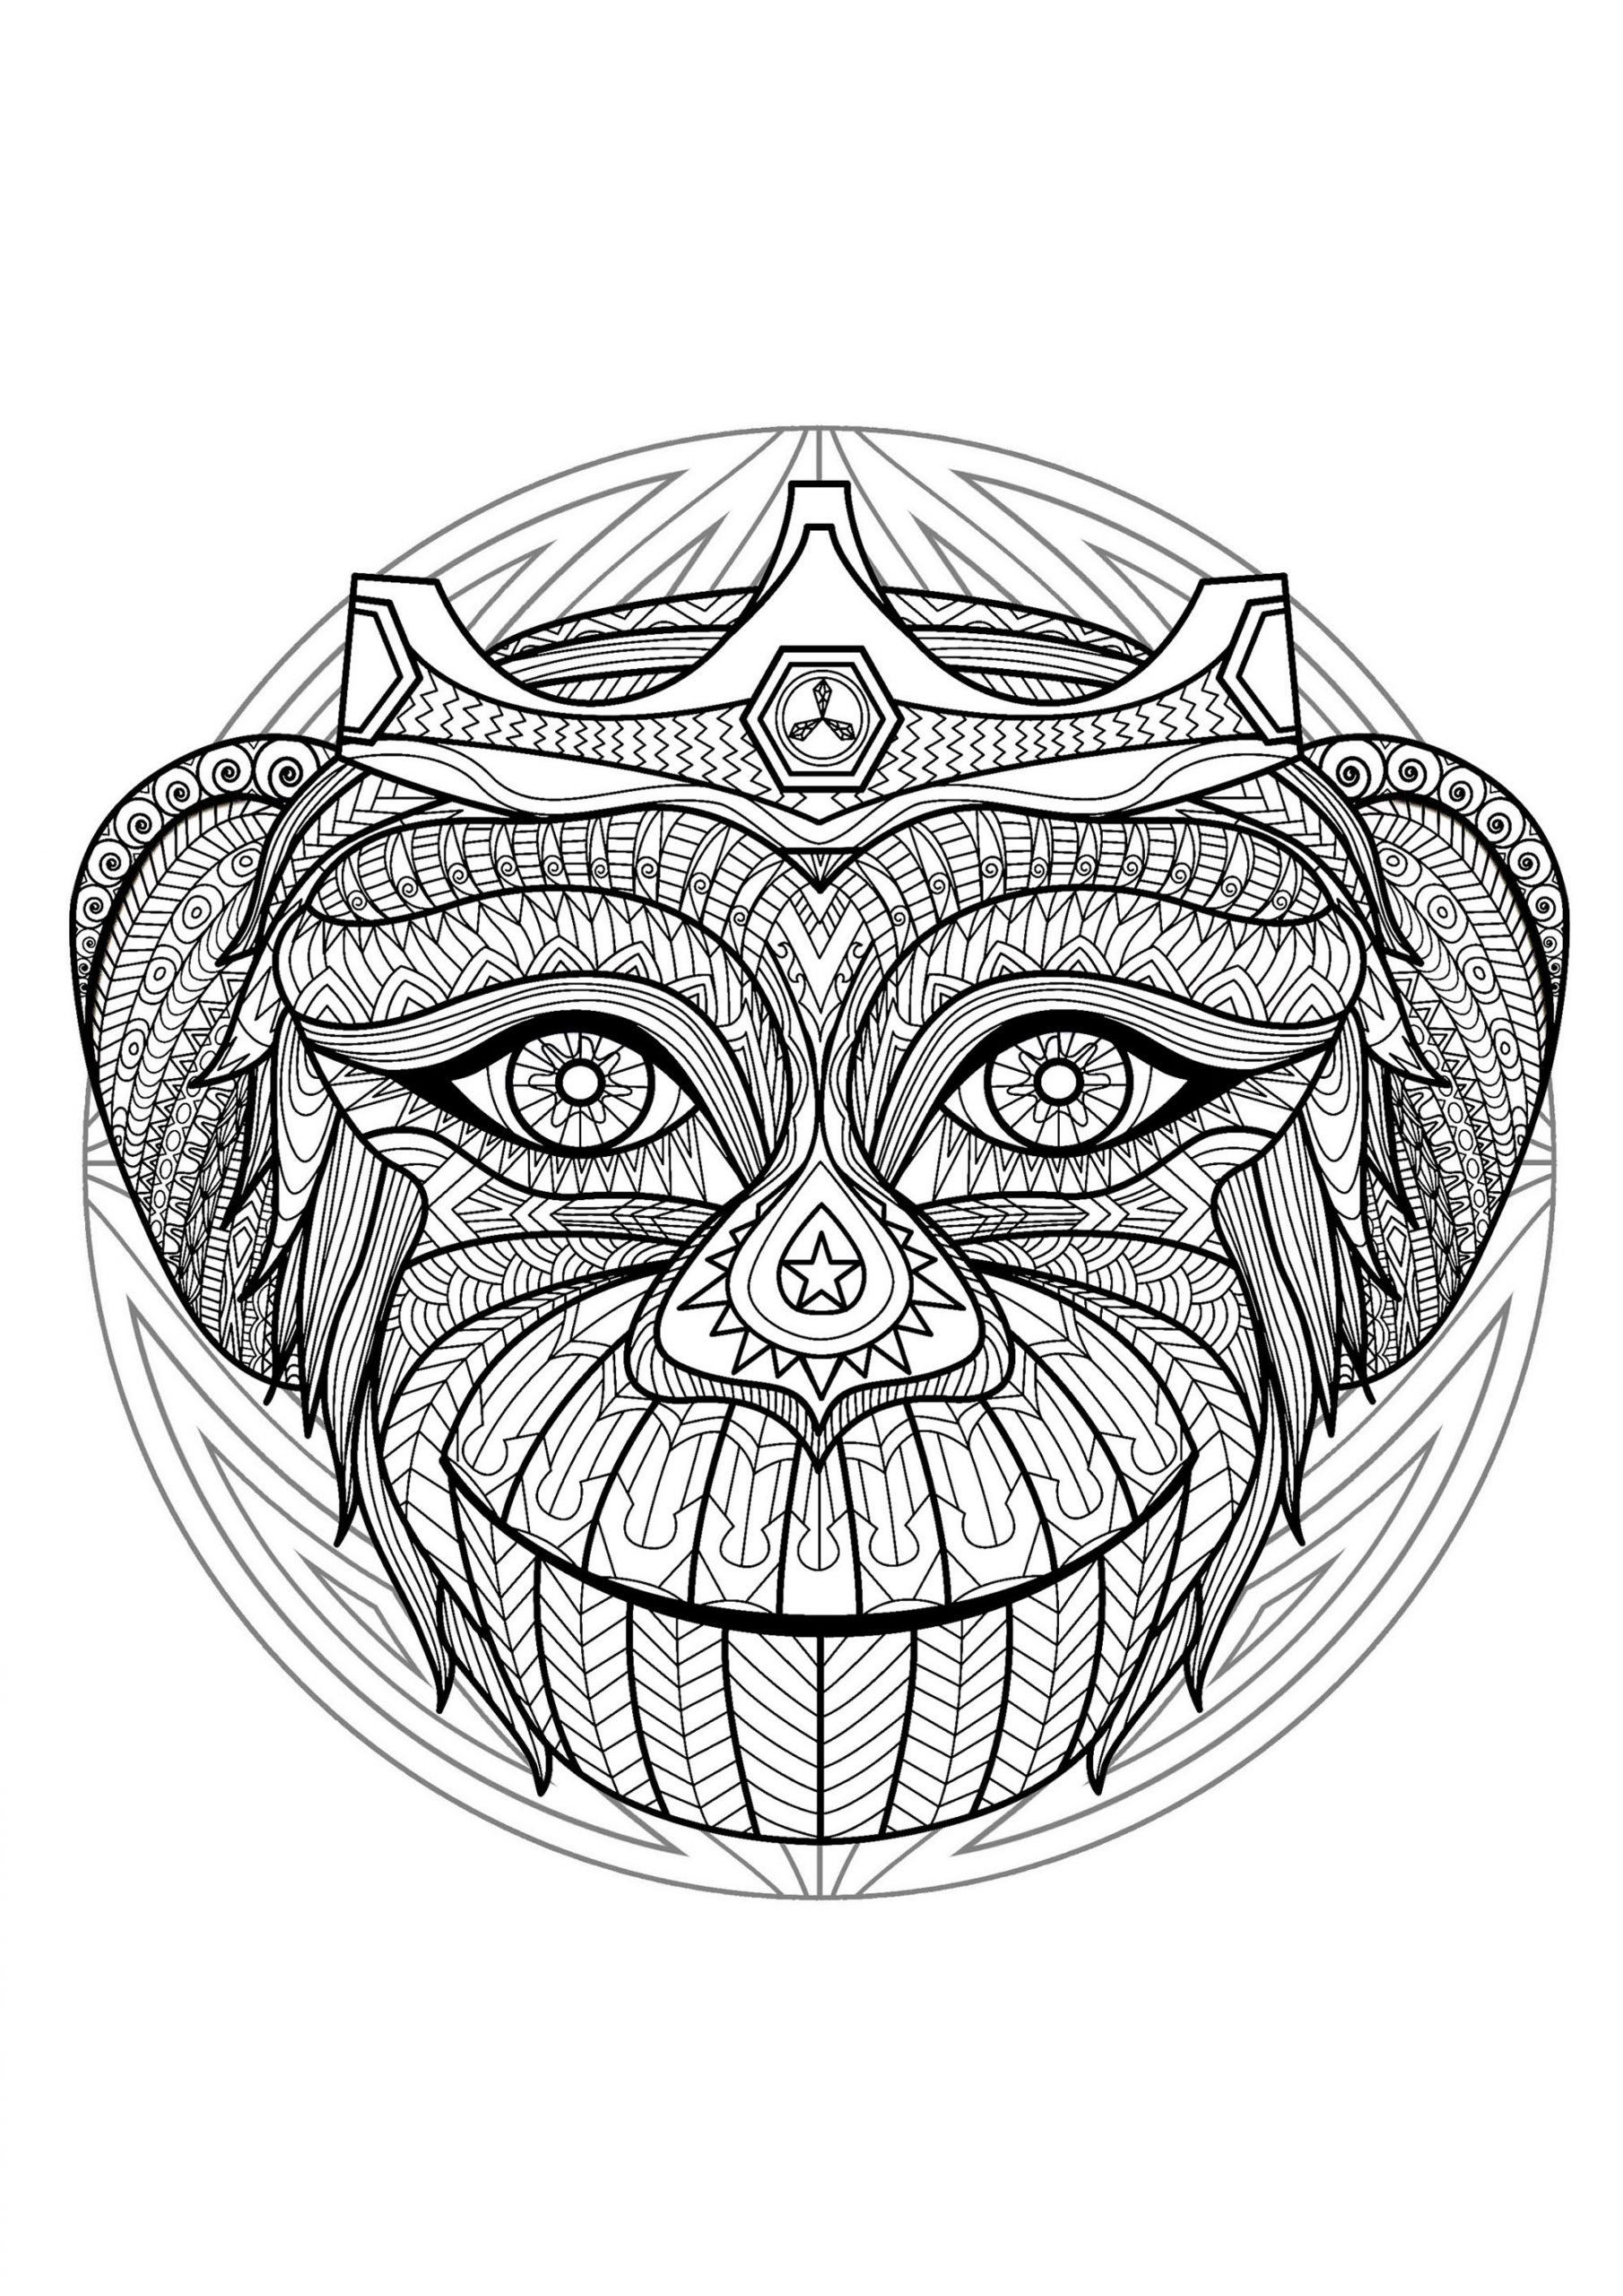 image=mandalas coloring mandala monkey head 2 1